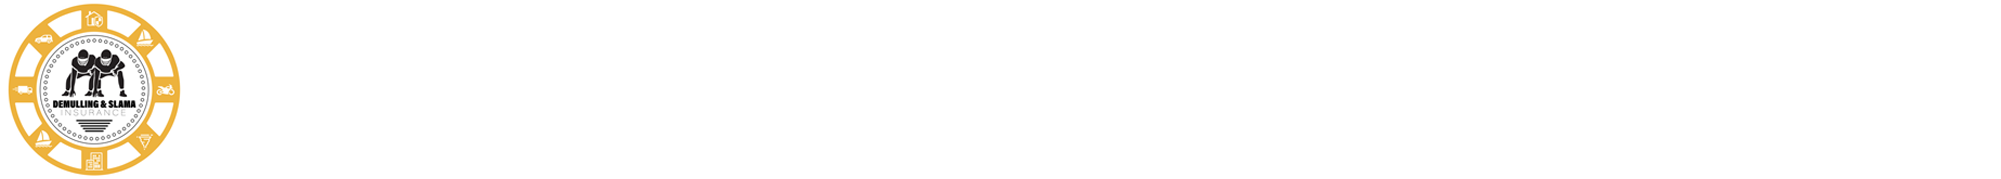 demulling slama insurance round logo site banner